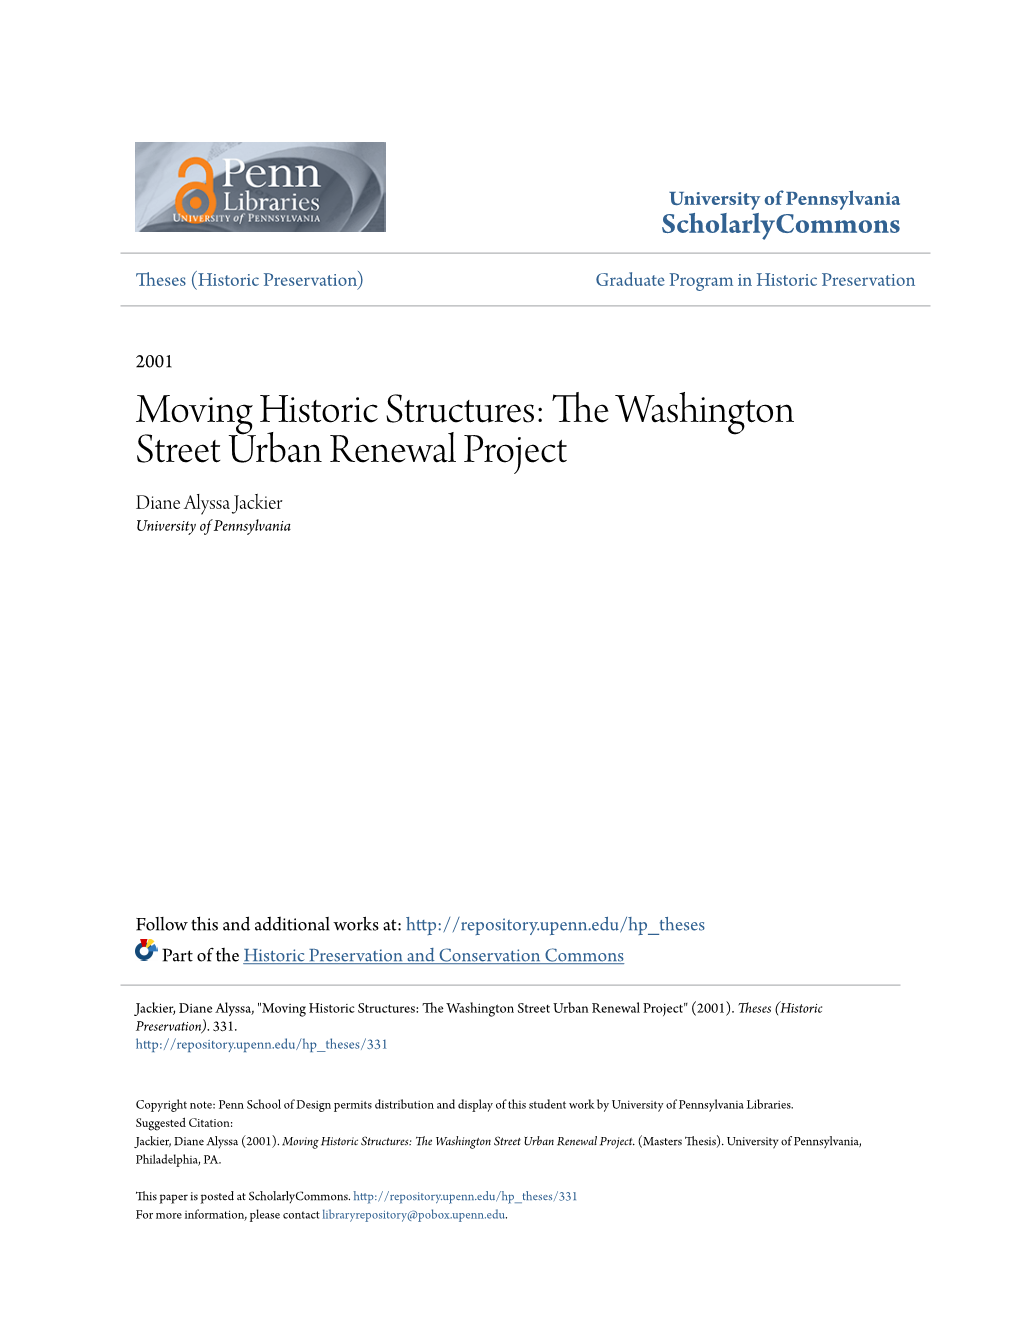 The Washington Street Urban Renewal Project